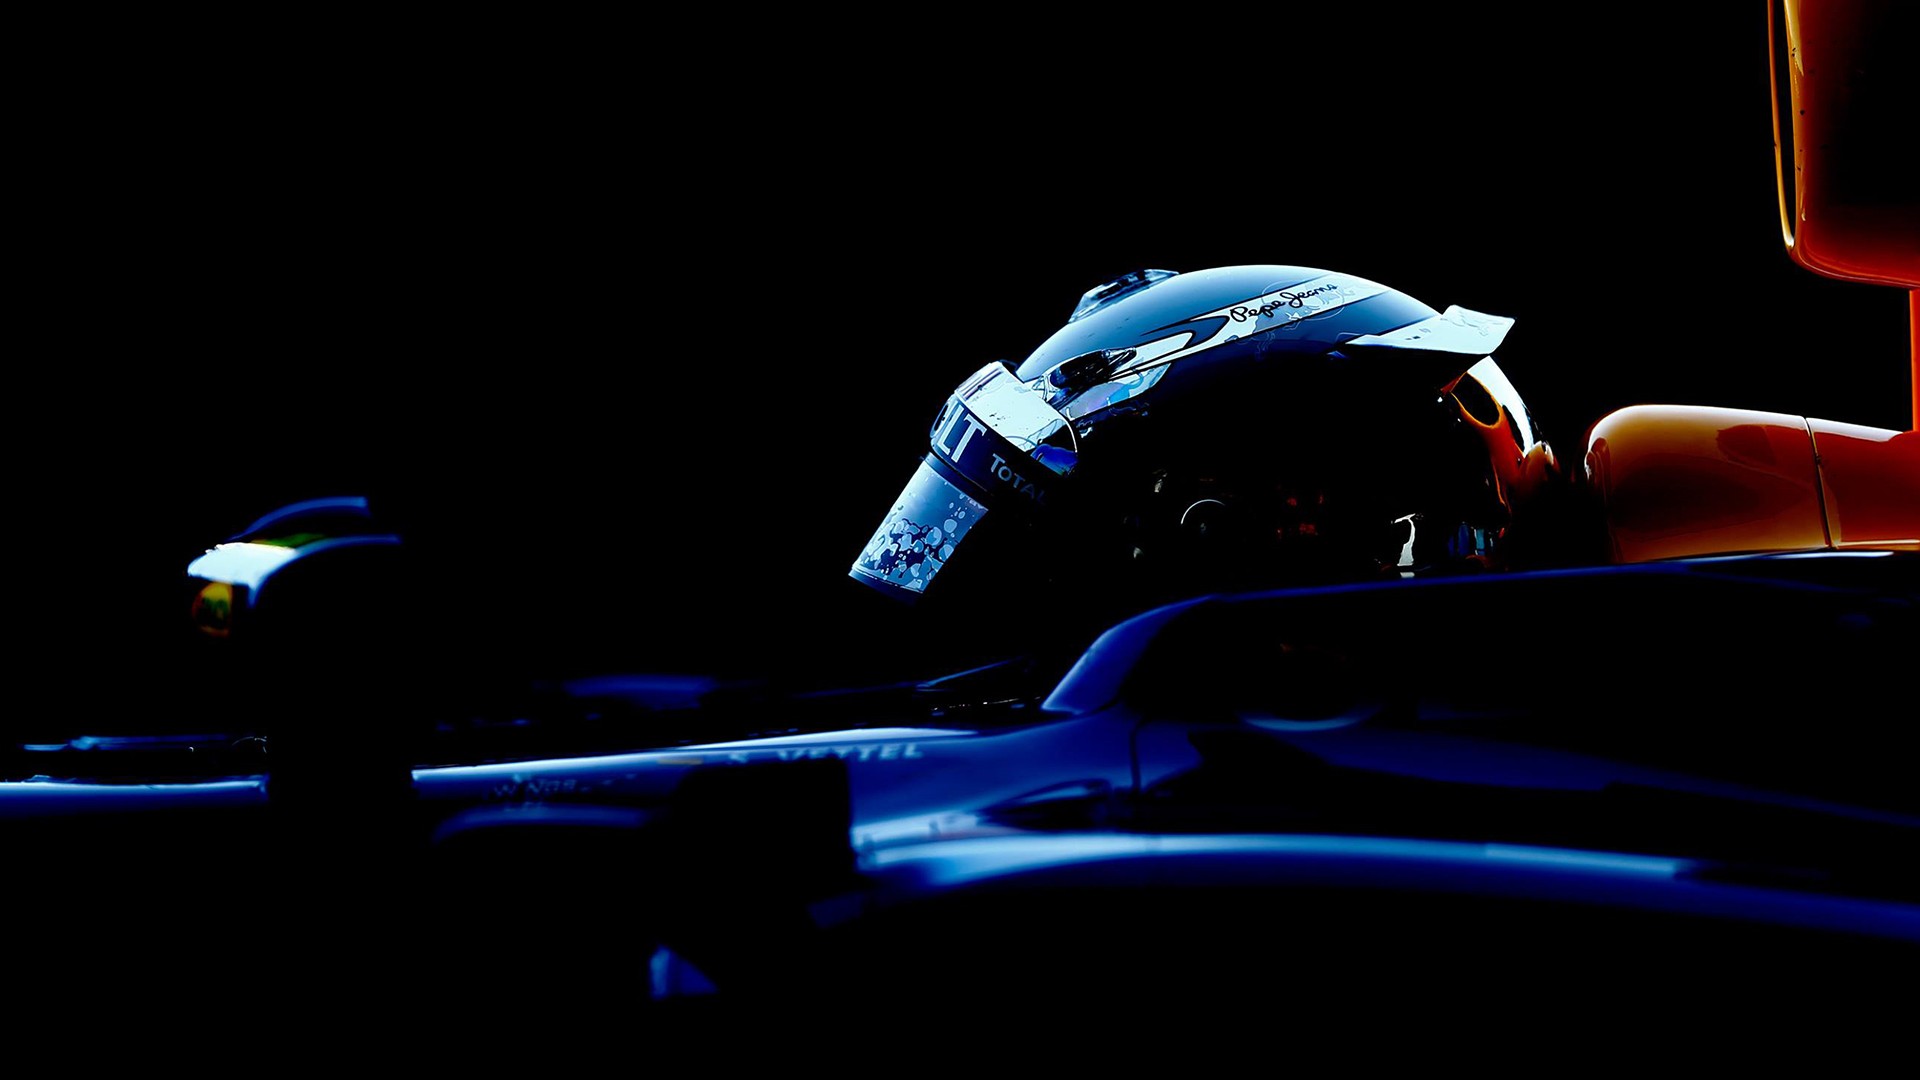 General 1920x1080 Red Bull Racing Formula 1 Sebastian Vettel racing sport car race cars motorsport black background vehicle Racing driver